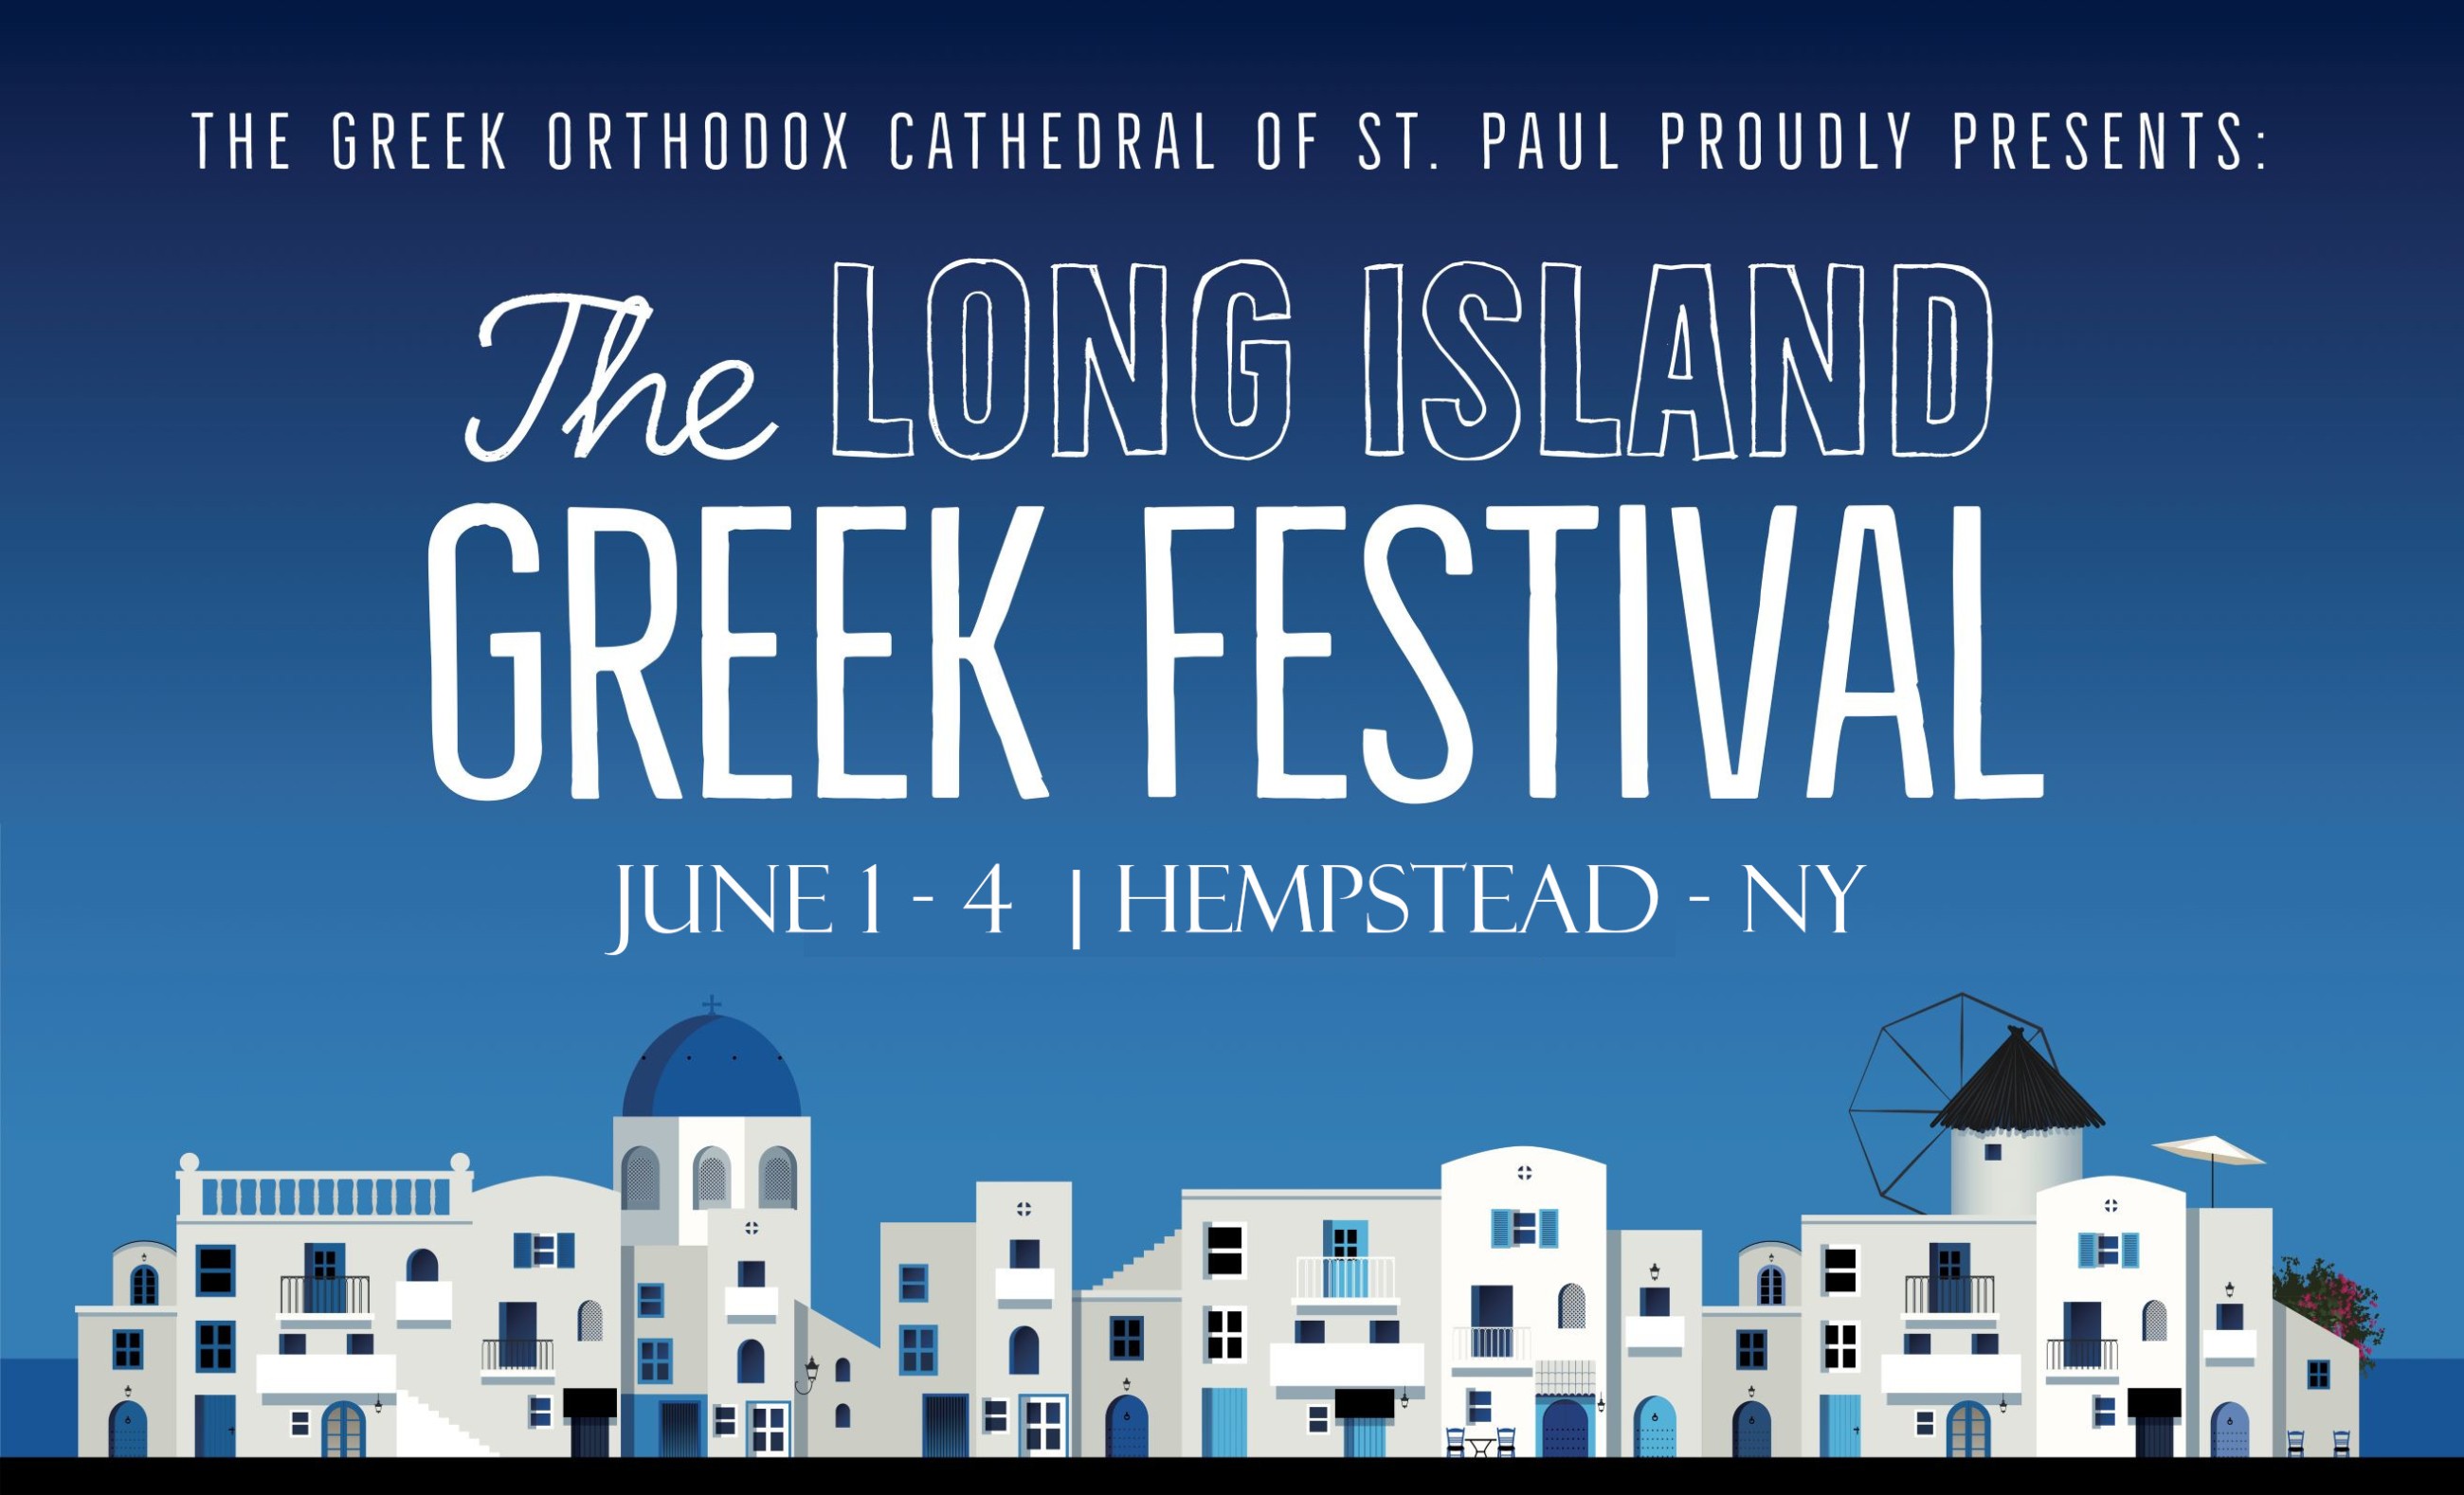 The Long Island Greek Festival